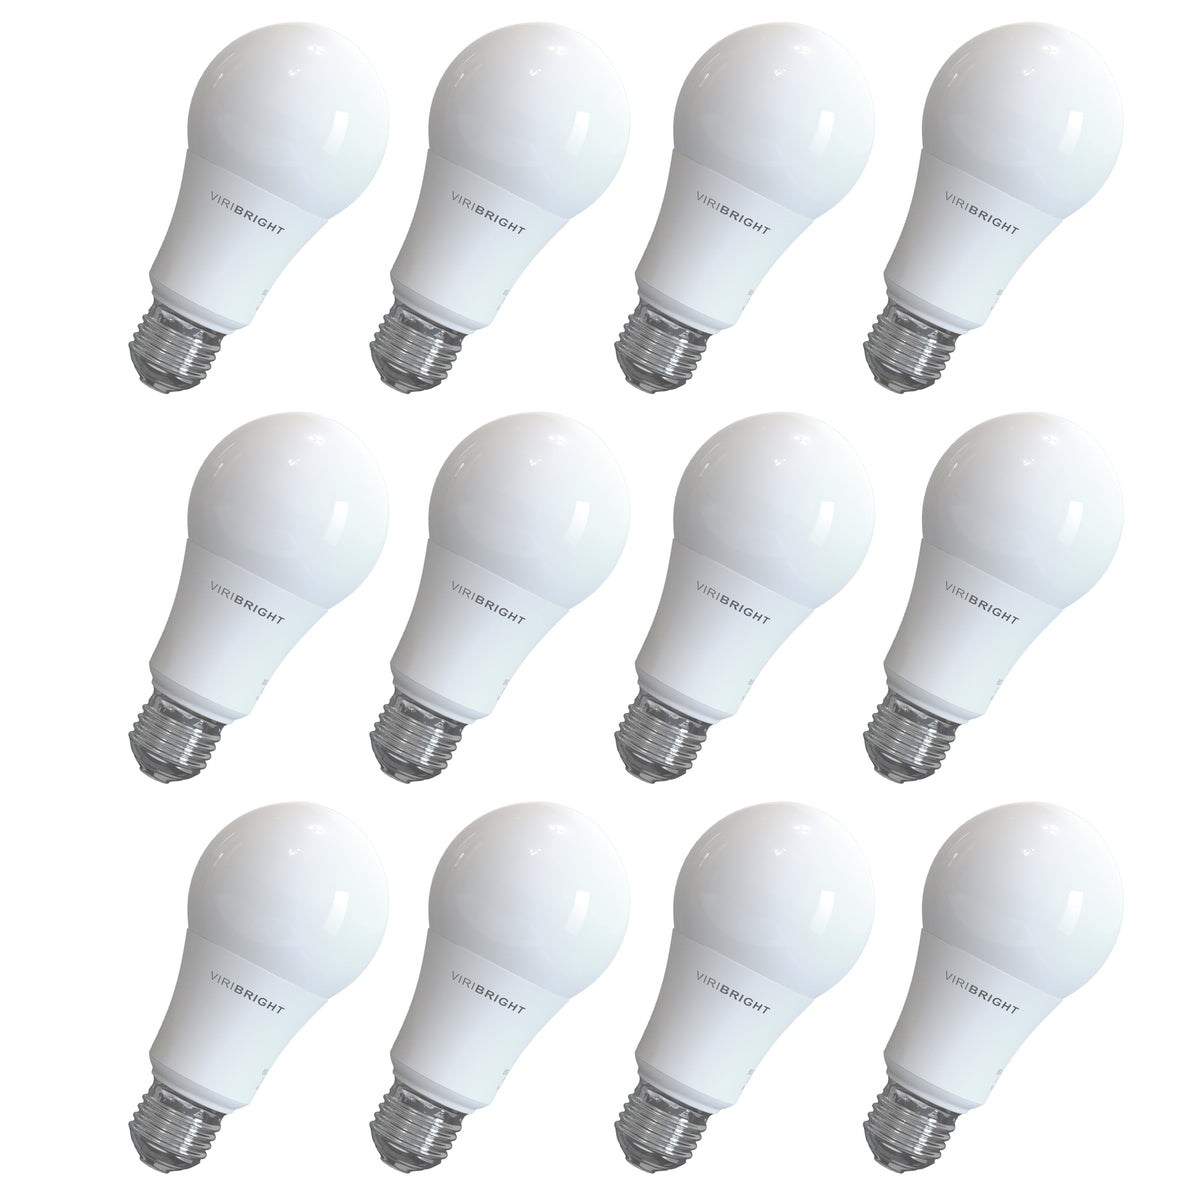 Picture of Viribright 750338-12SC 2700K 60W Equivalent Soft White A19 E26 Base LED Light Bulbs - Pack of 12